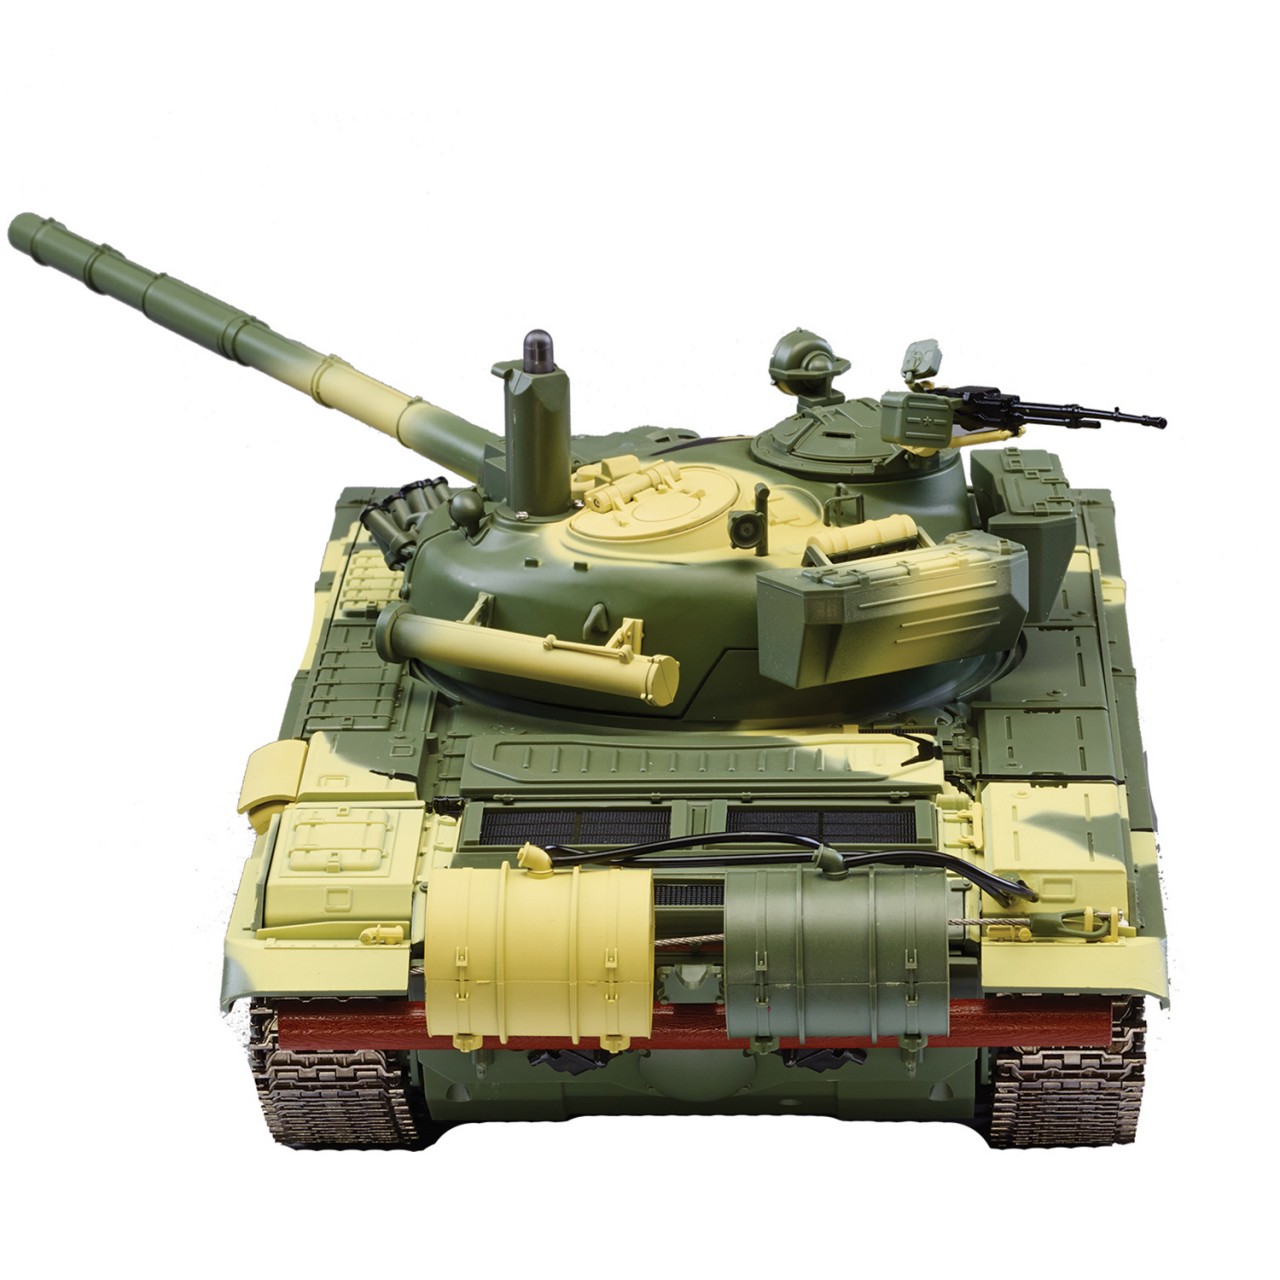 T 72 Russian Tank Full Kit 1 16 Military Model De Agostini Model